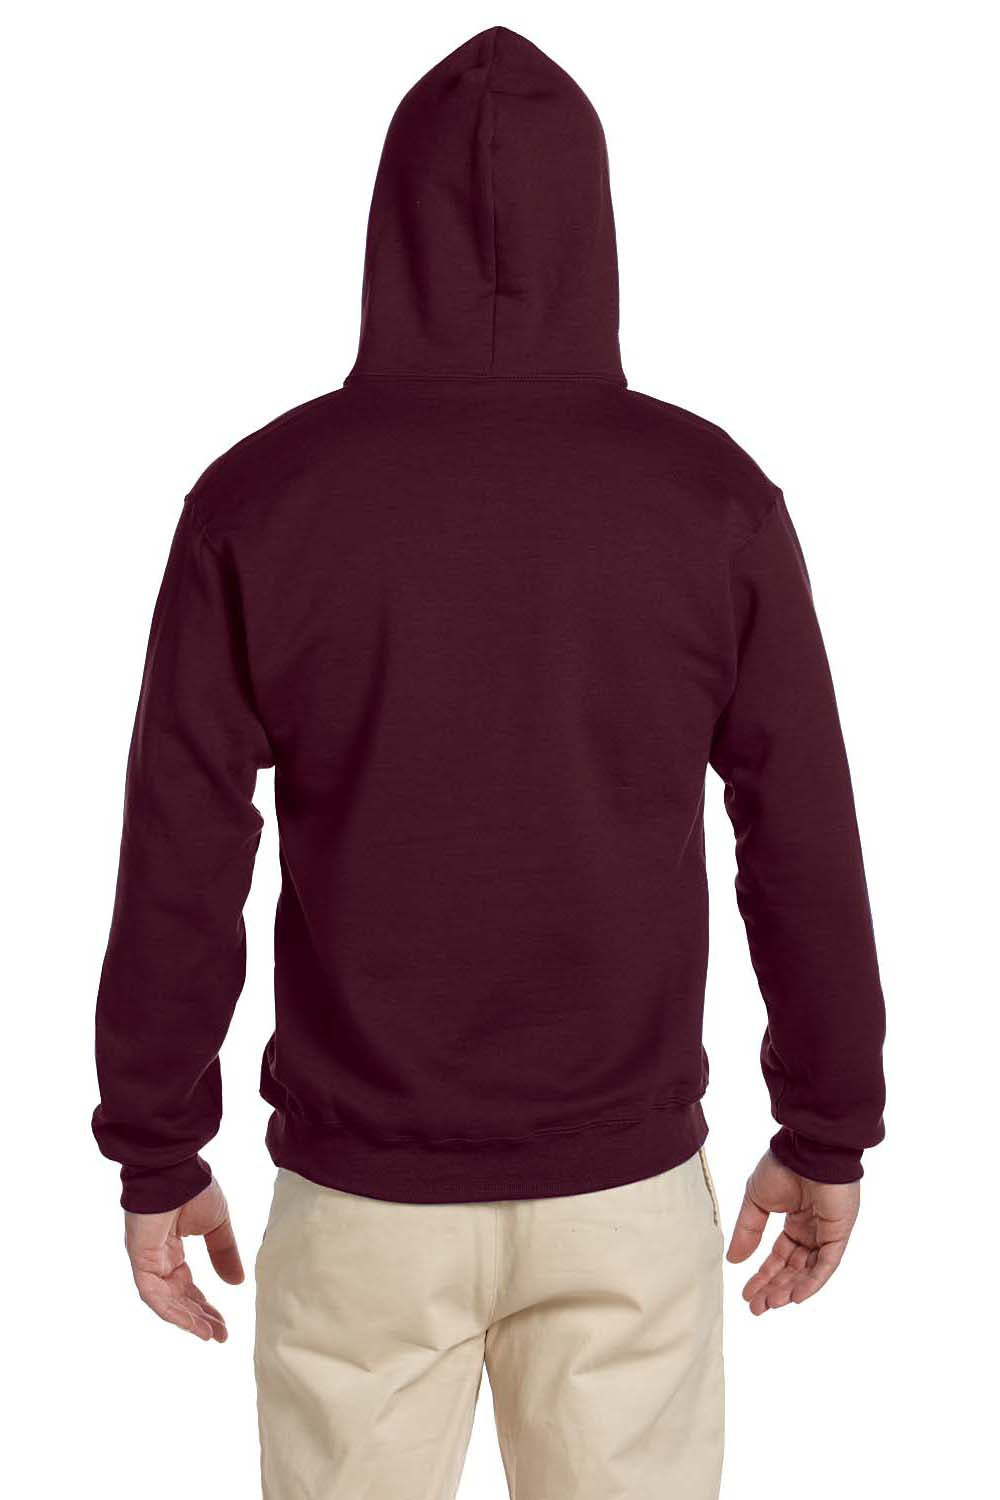 Jerzees 4997 Mens Super Sweats NuBlend Fleece Hooded Sweatshirt Hoodie Maroon Back